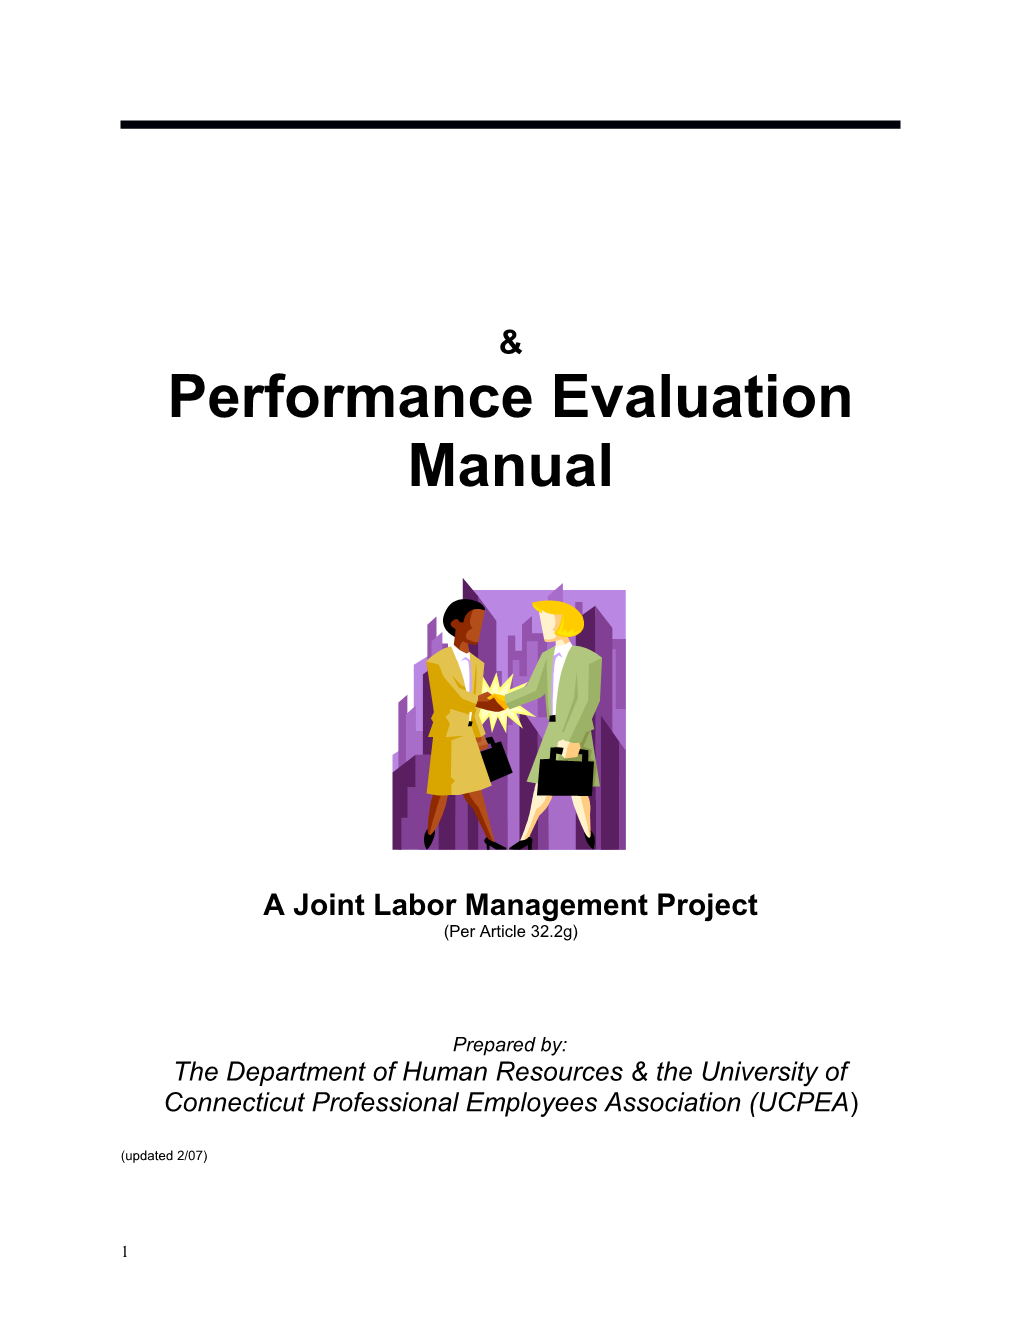 A Joint Labor Management Project